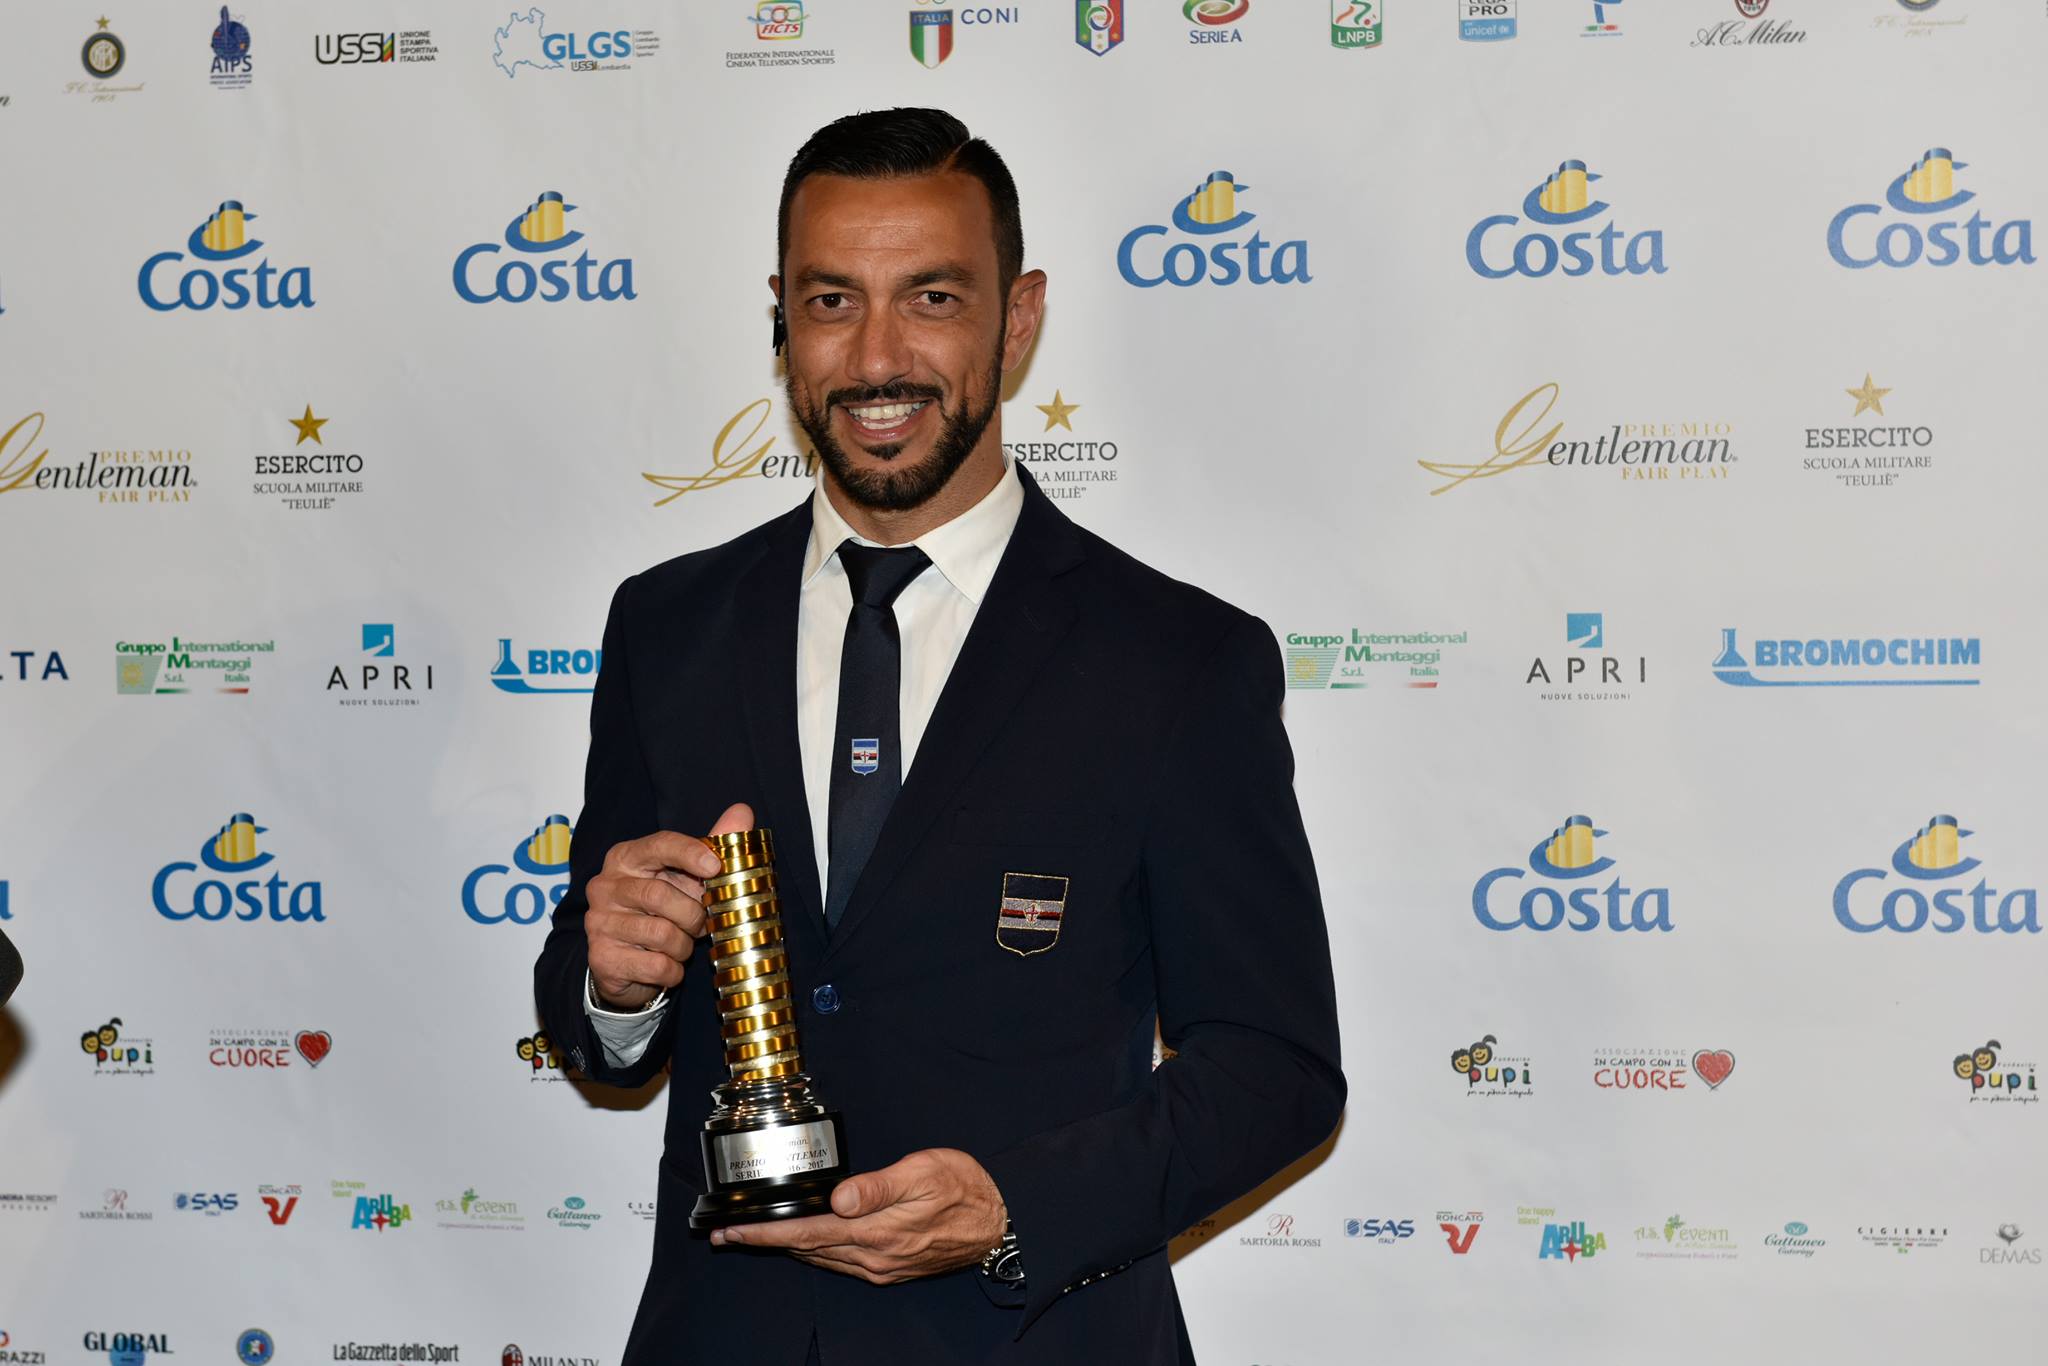 Sampdoria Premio Gentleman Quagliarella